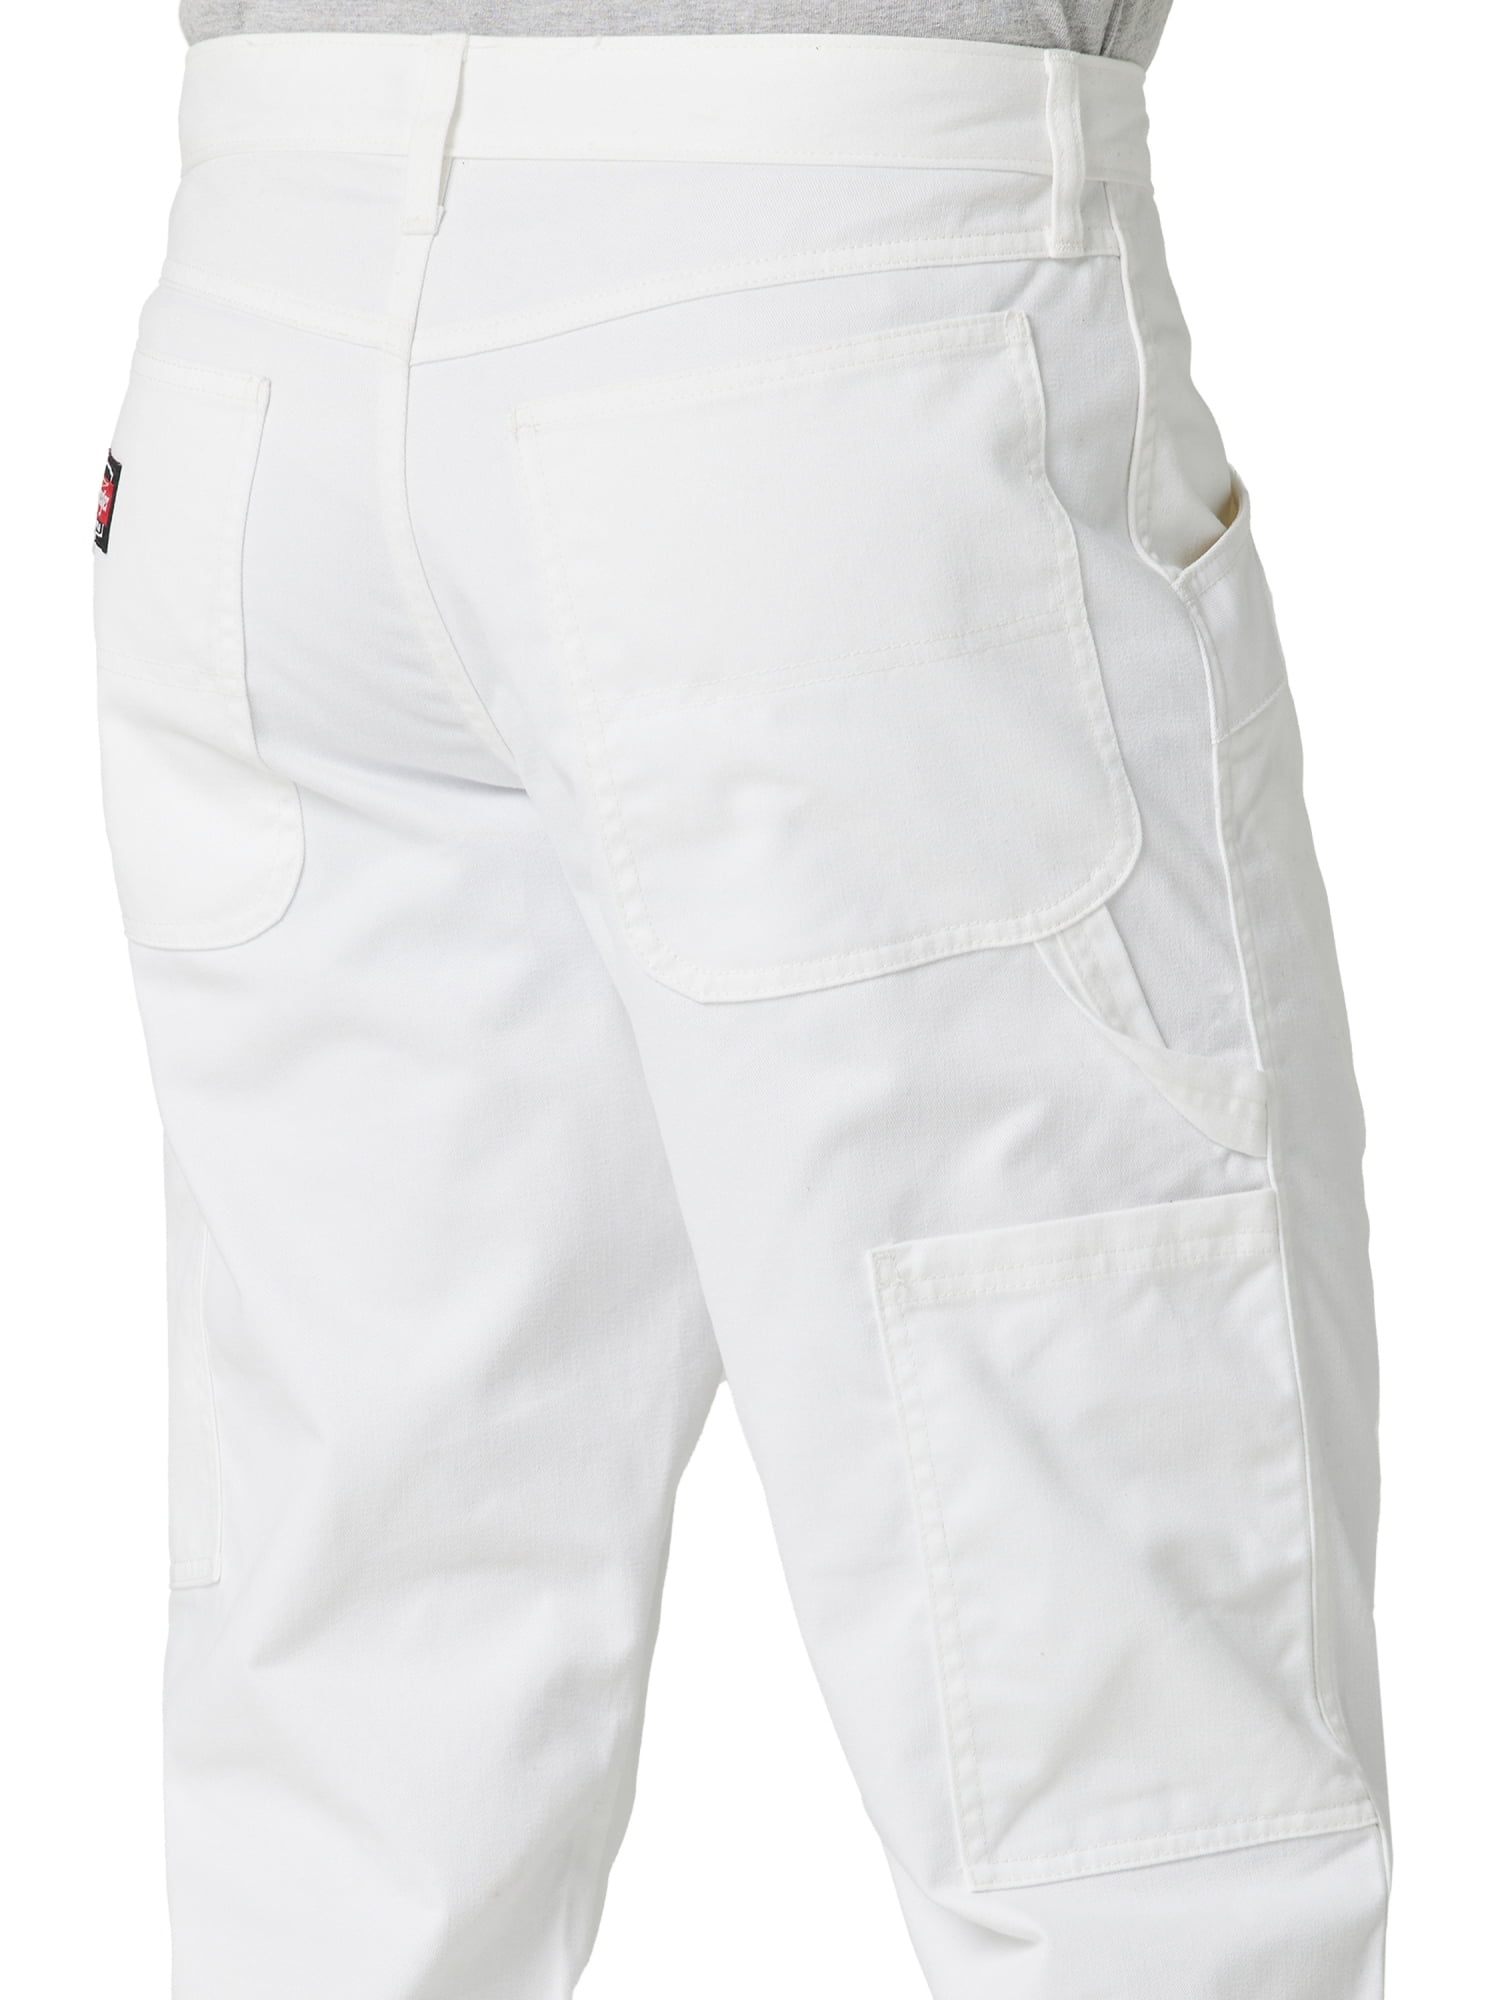 Blaklader Painters Trousers Overalls Shorts  the range reviewed   workwearguruscom